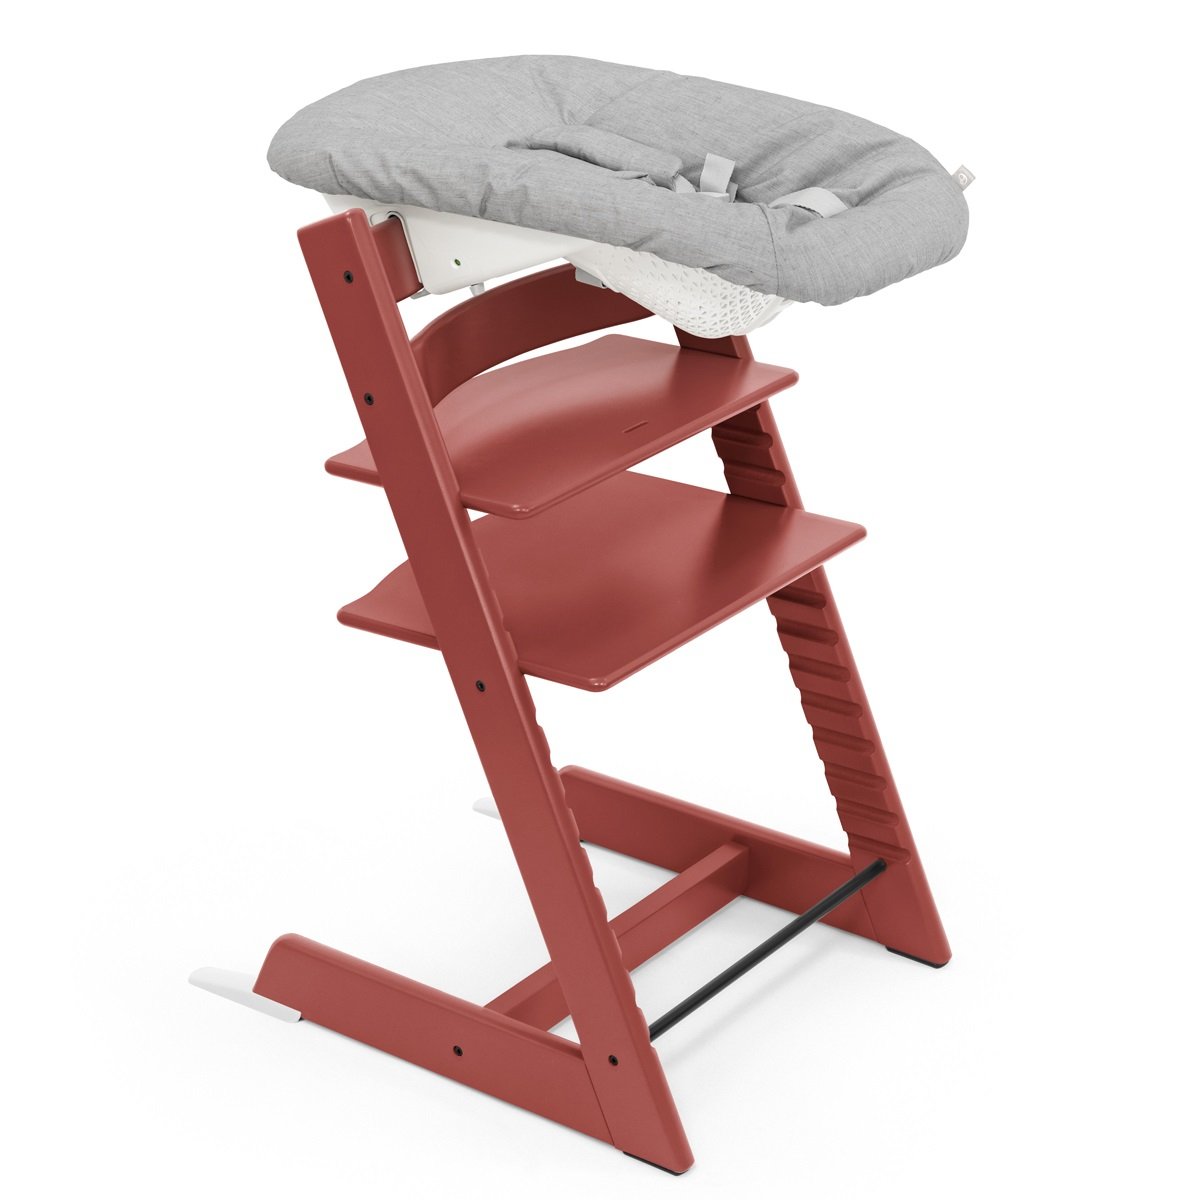 Набор Stokke Newborn Tripp Trapp Warm Red: стульчик и кресло для новорожденных (k.100136.52) - фото 2